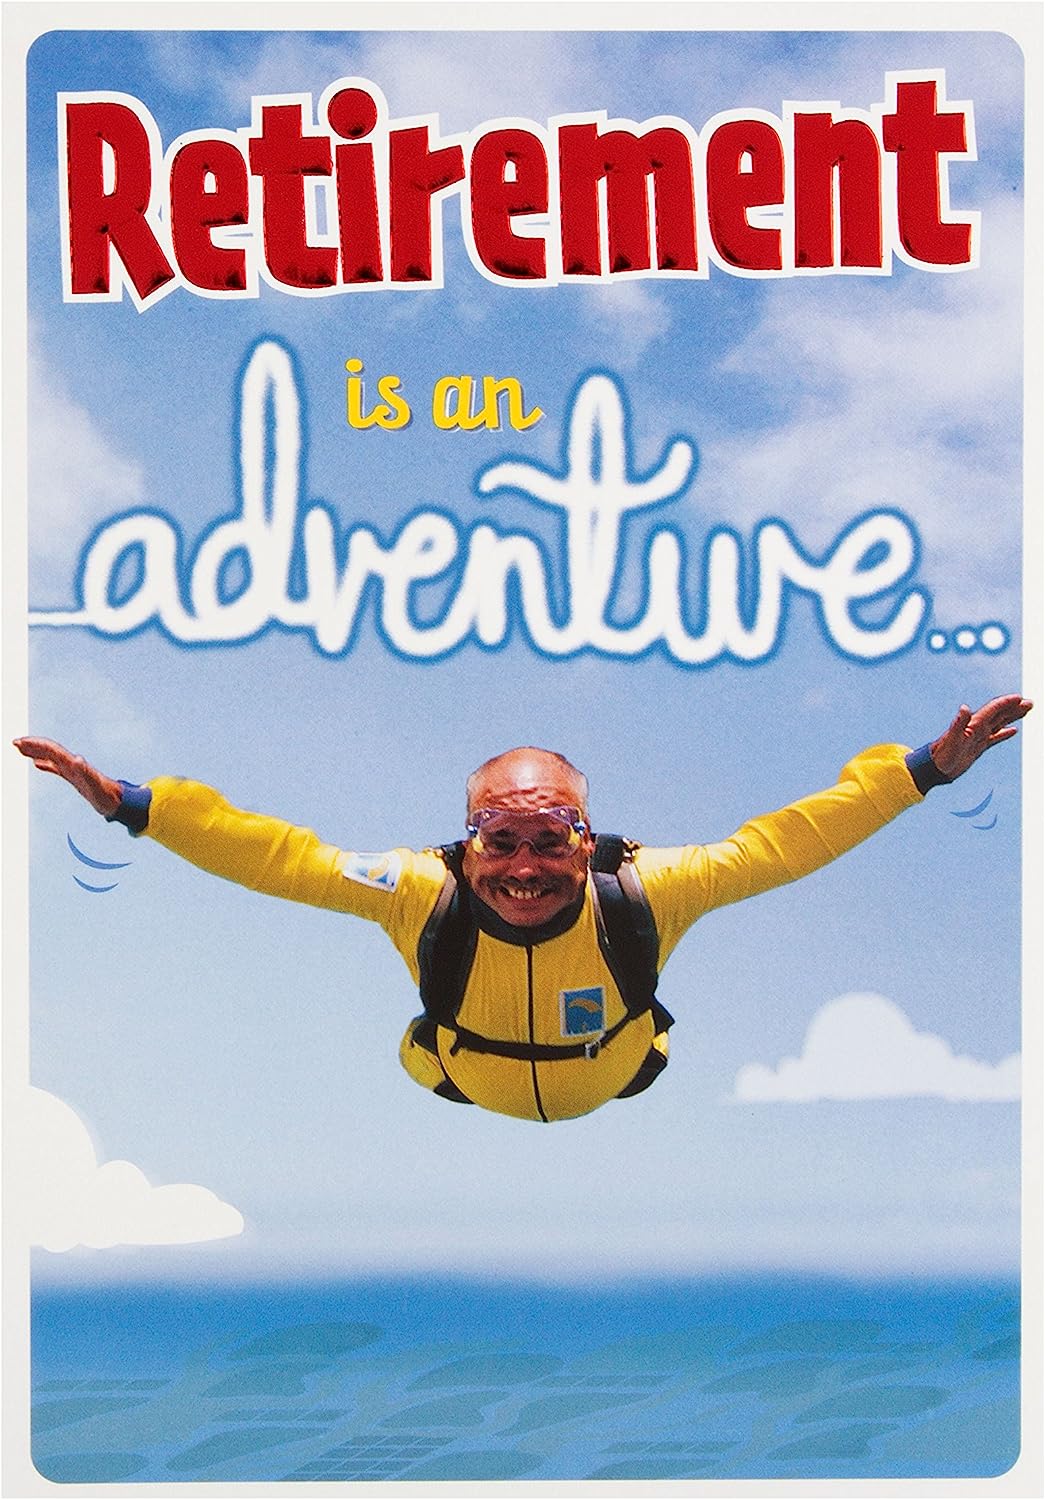 Humour Retirement Card - Adventurous Sky Diving